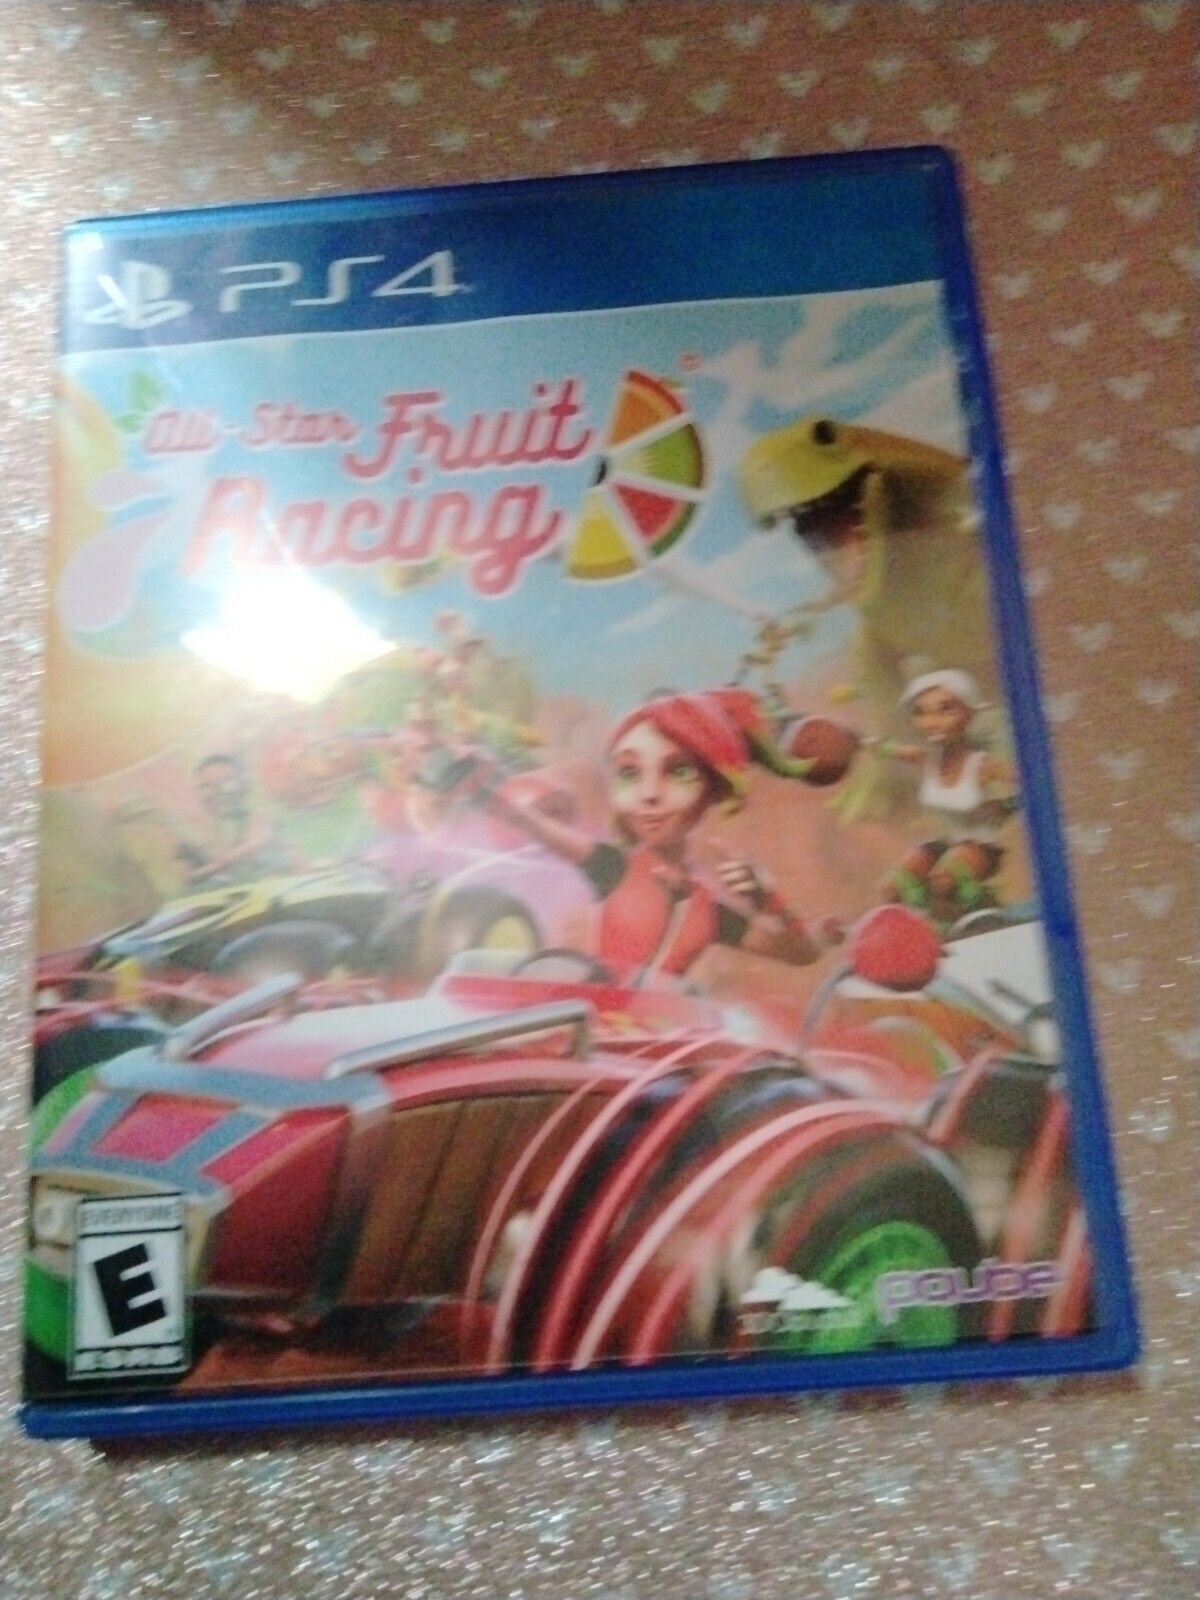 All-Star Fruit Racing - Sony PlayStation 4